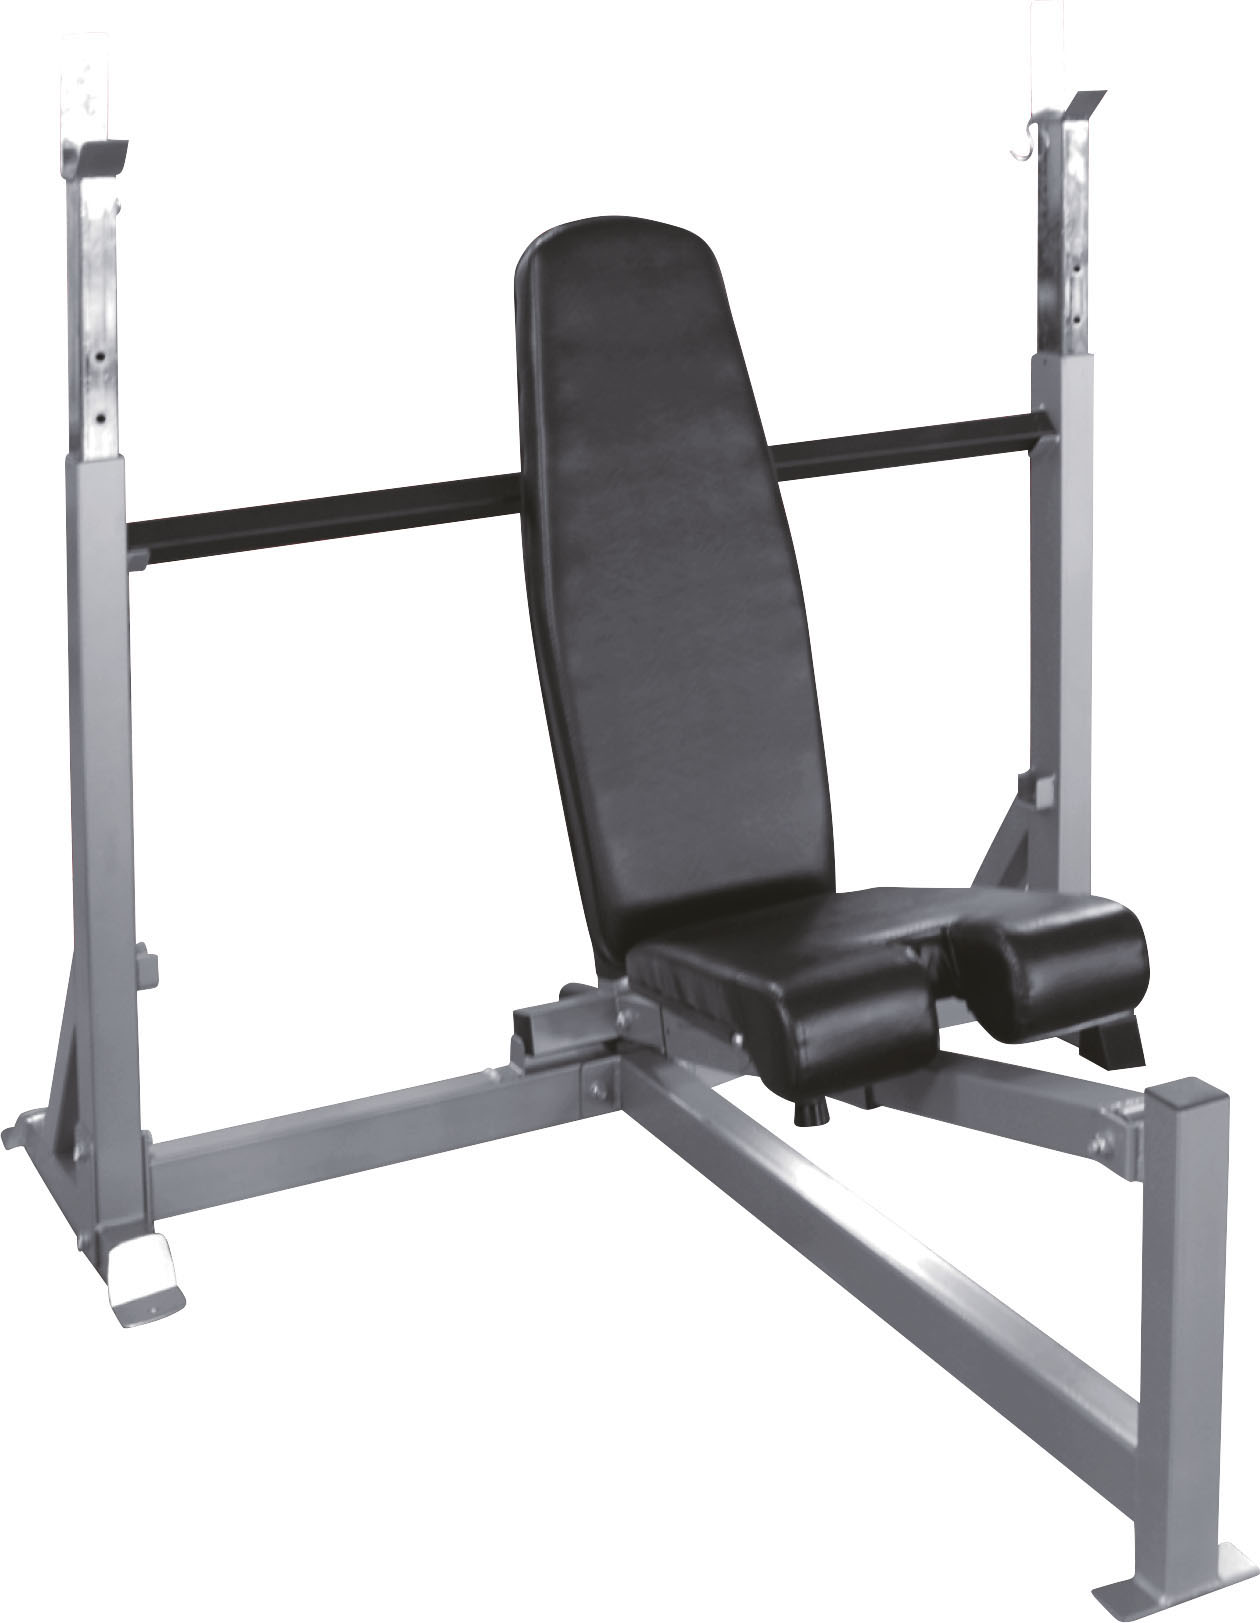 Adjustable olympic bench press